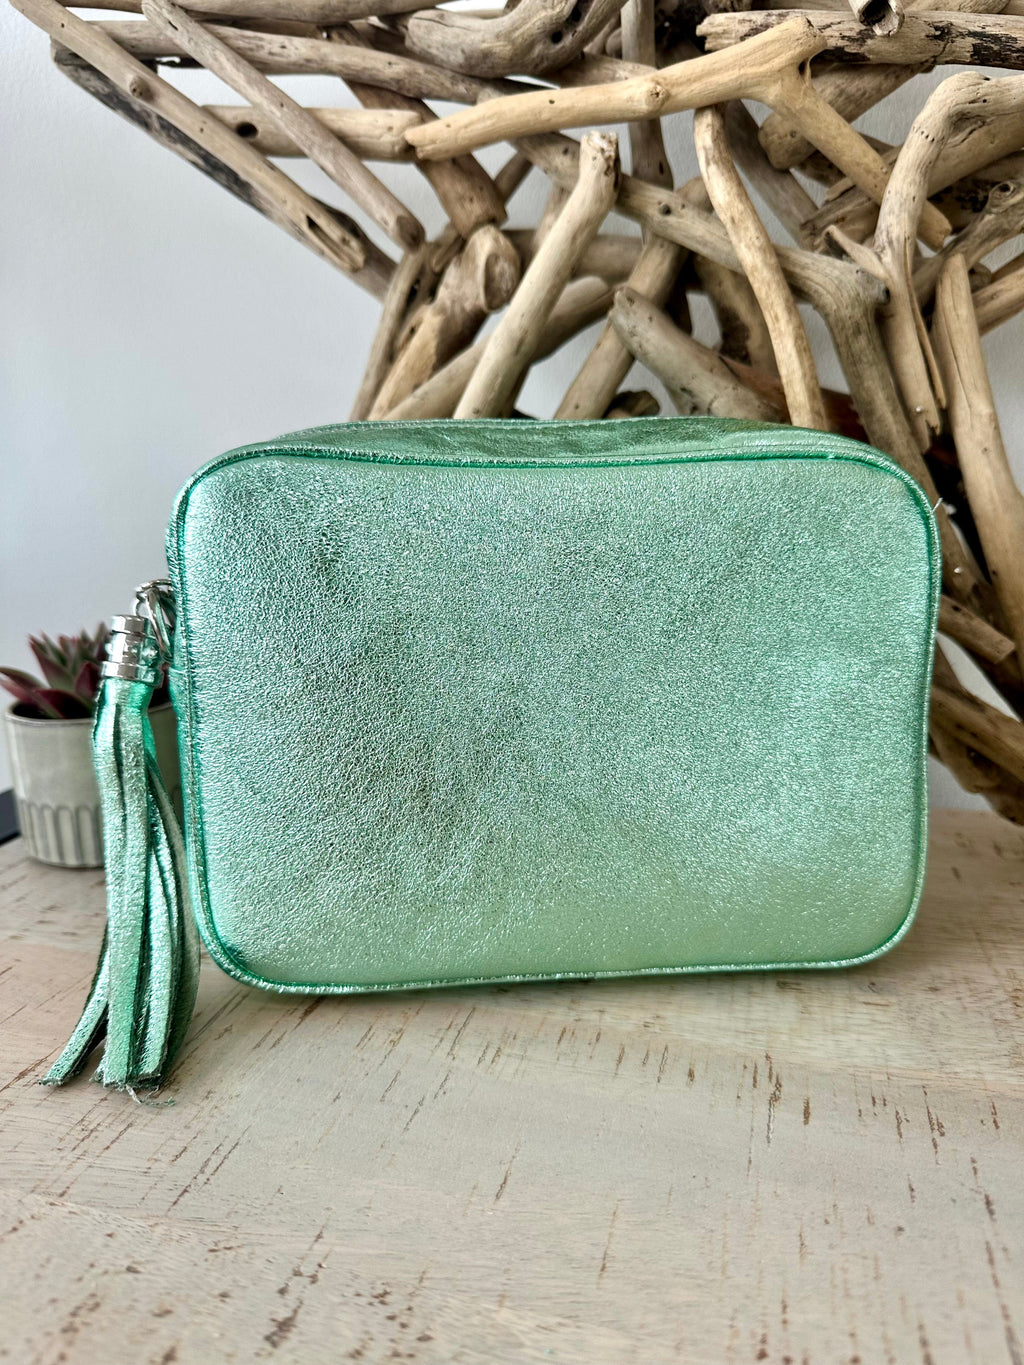 lusciousscarves Metallic Mint Green Italian Leather Camera Bag Style Crossbody Bag